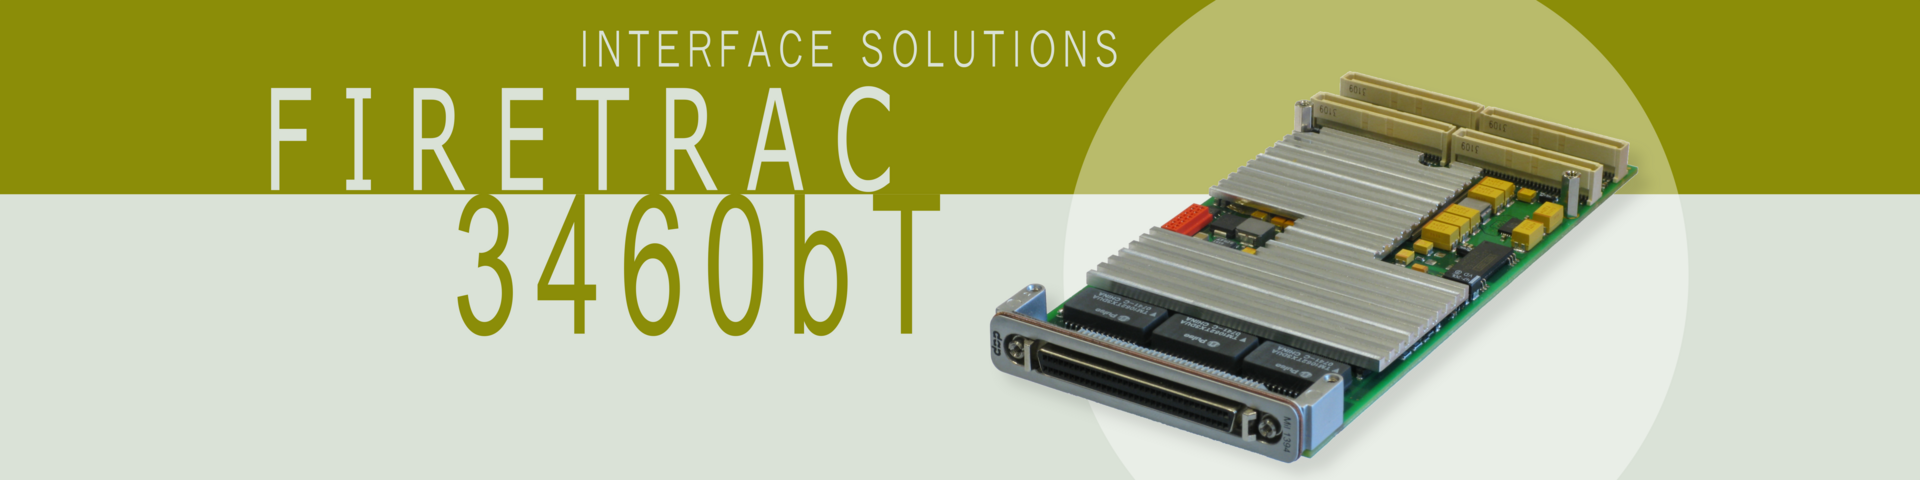 AS5643 Advanced Interface Card - FireTrac3460bT